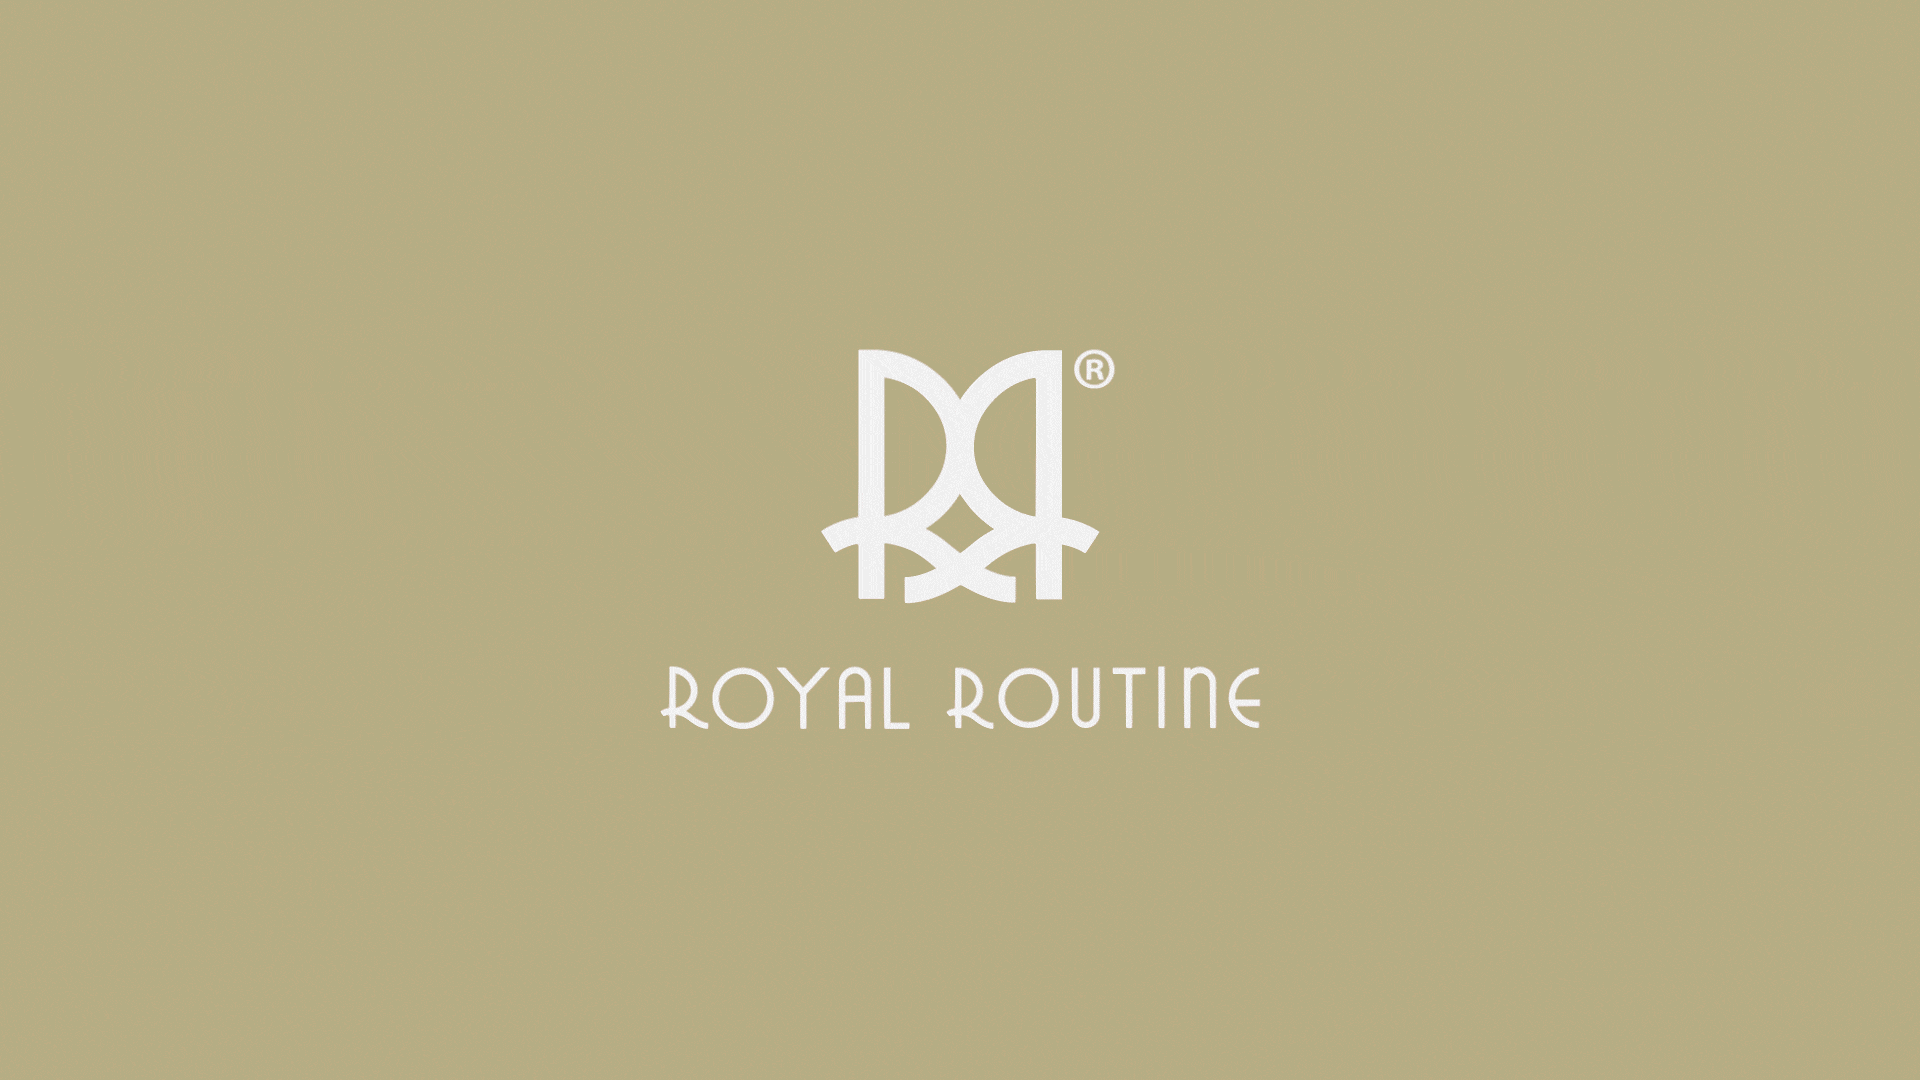 Royal Routine Full Logo by Guste.Design